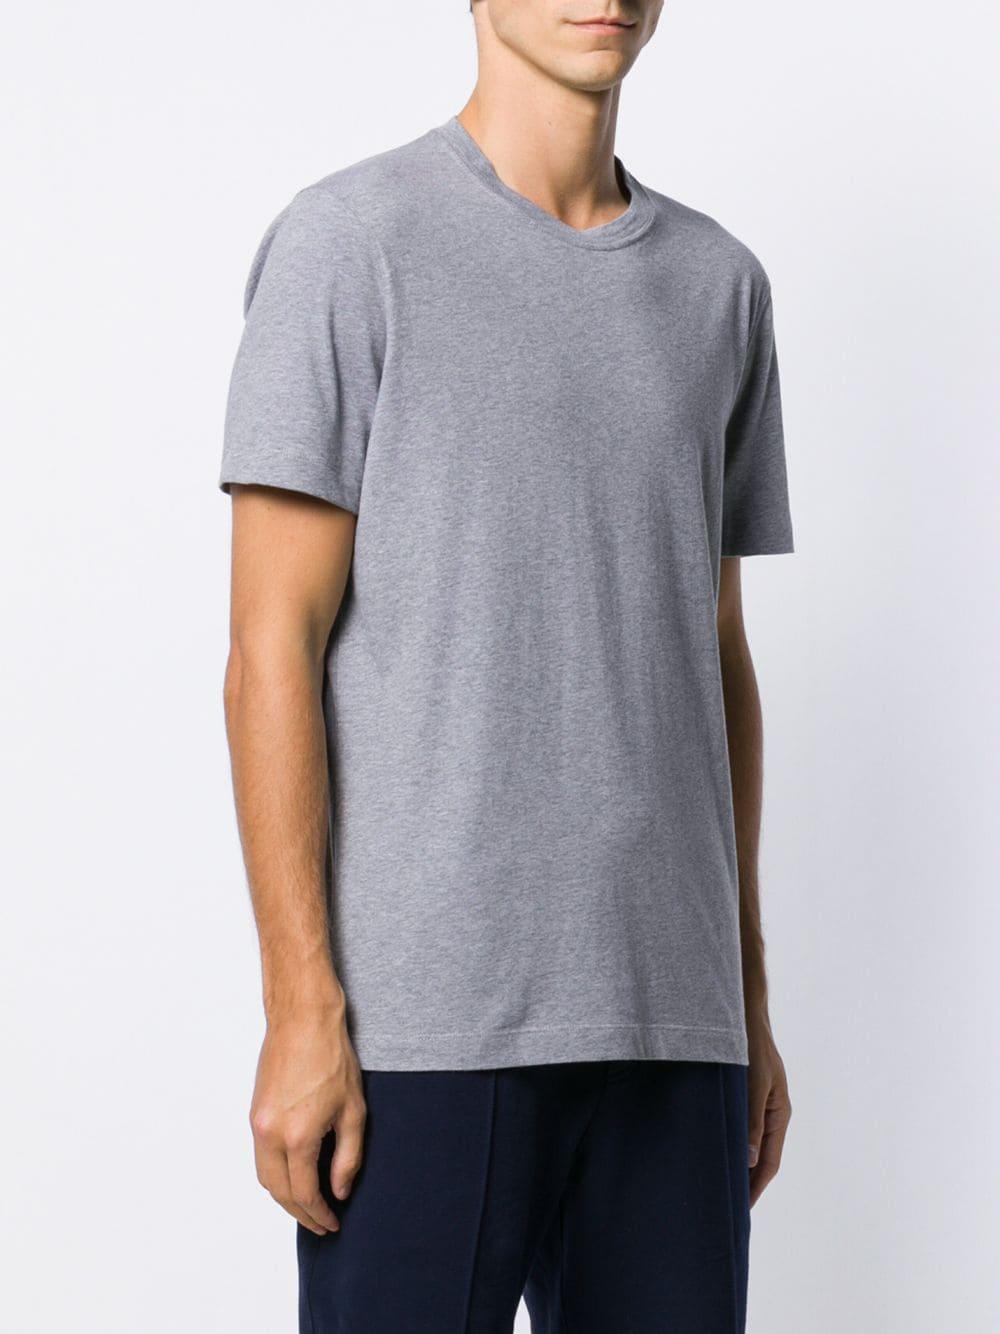 Brunello Cucinelli Cotton Crew Neck T-shirt in Grey (Gray) for Men - Lyst